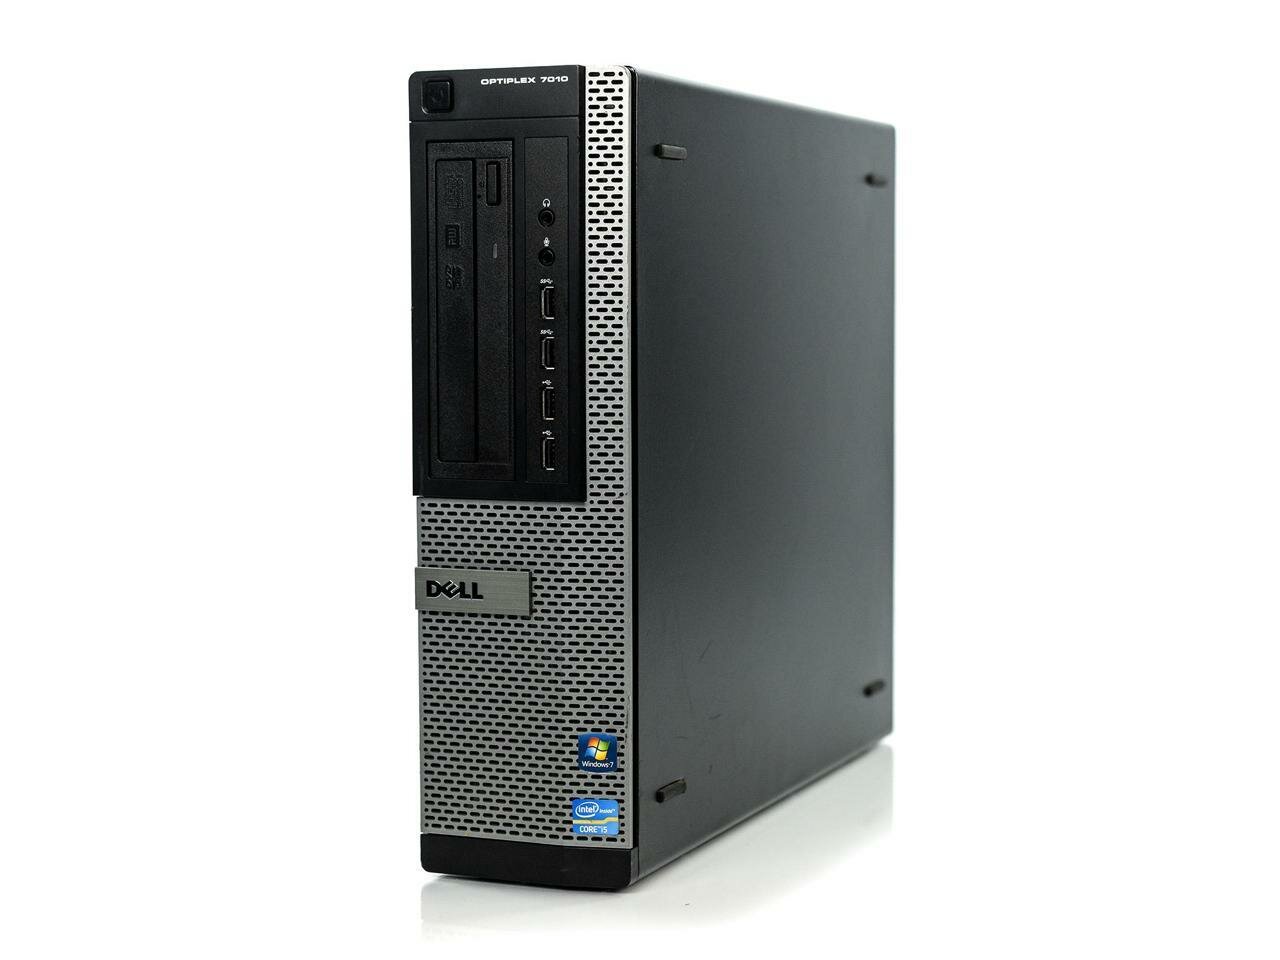 Системный блок, компьютер Dell Optiplex 7010 DT - Core i3-3220, 4GB RAM, 500GB HDD